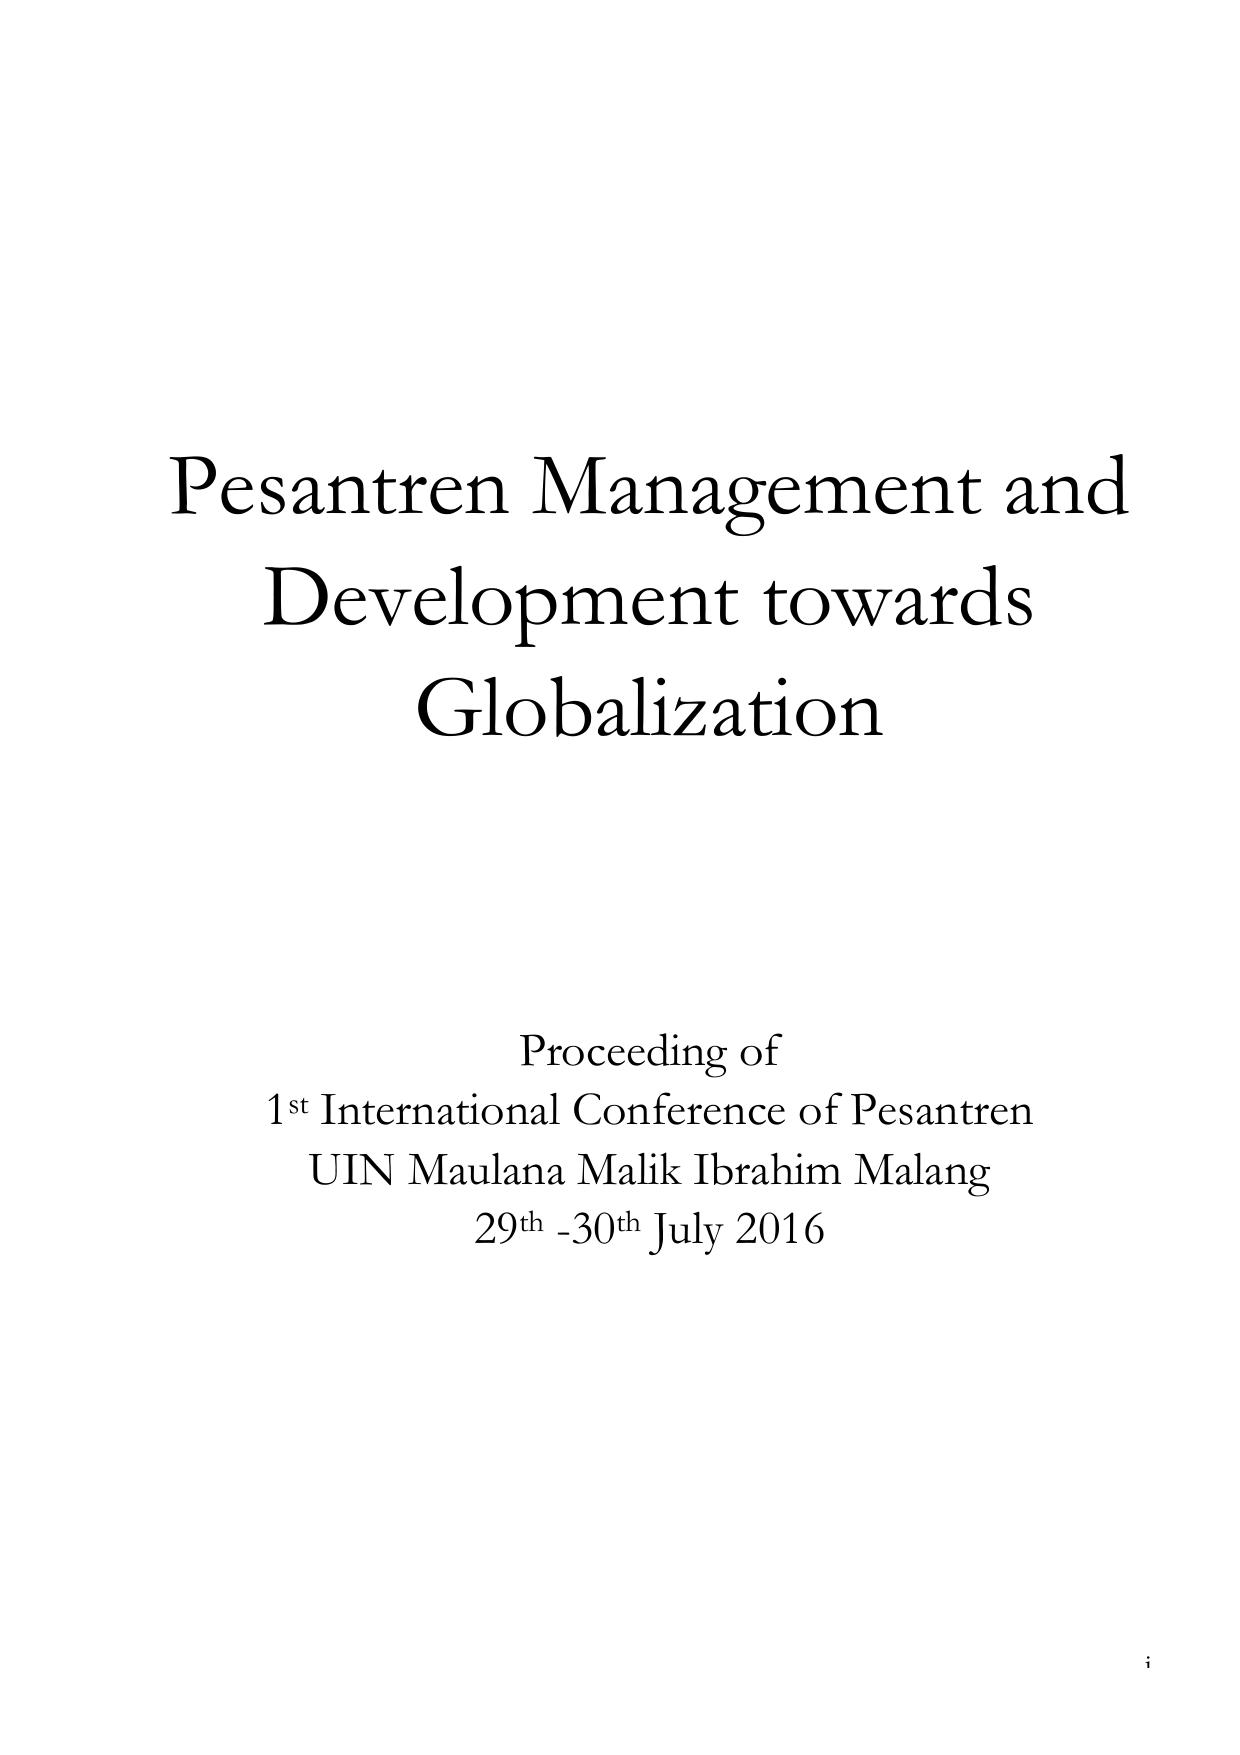 Pesantren Management & Dev. towards Globalization